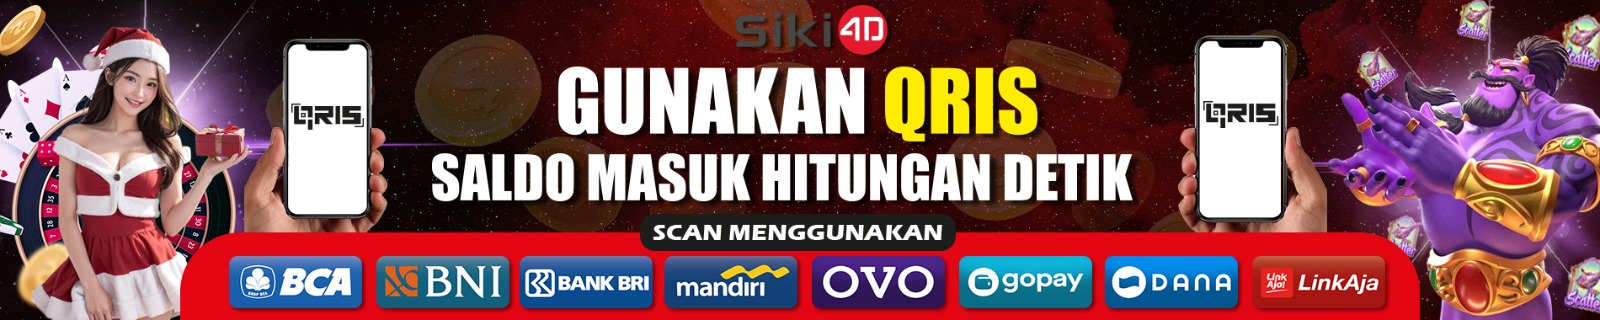 desktop banner qris siki